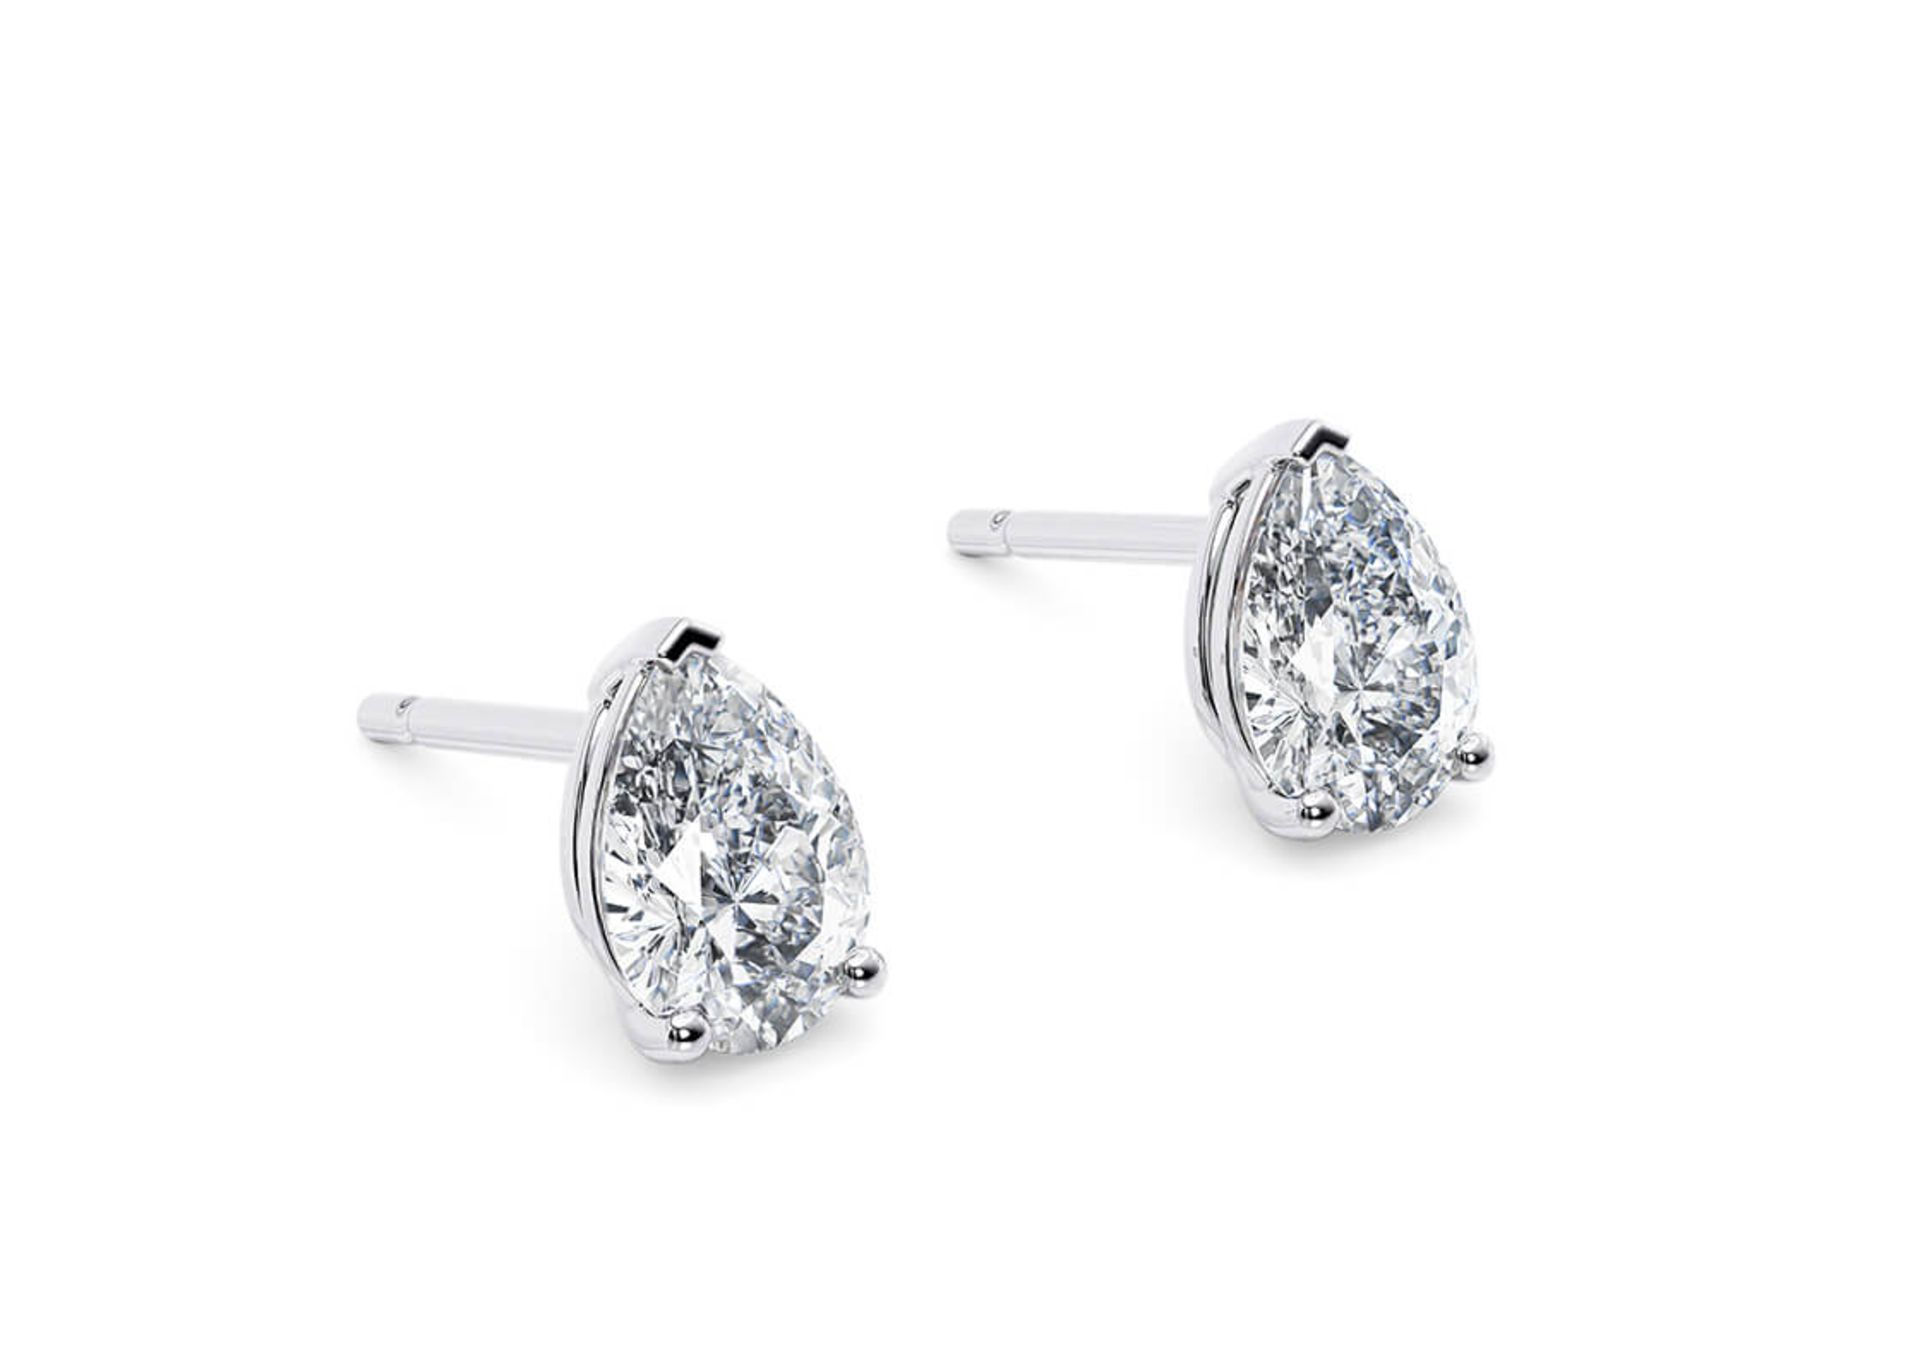 Pear Cut Cut 4.00 Carat Diamond 18kt White Gold Earrings- F Colour VS Clarity IGI - Image 2 of 3